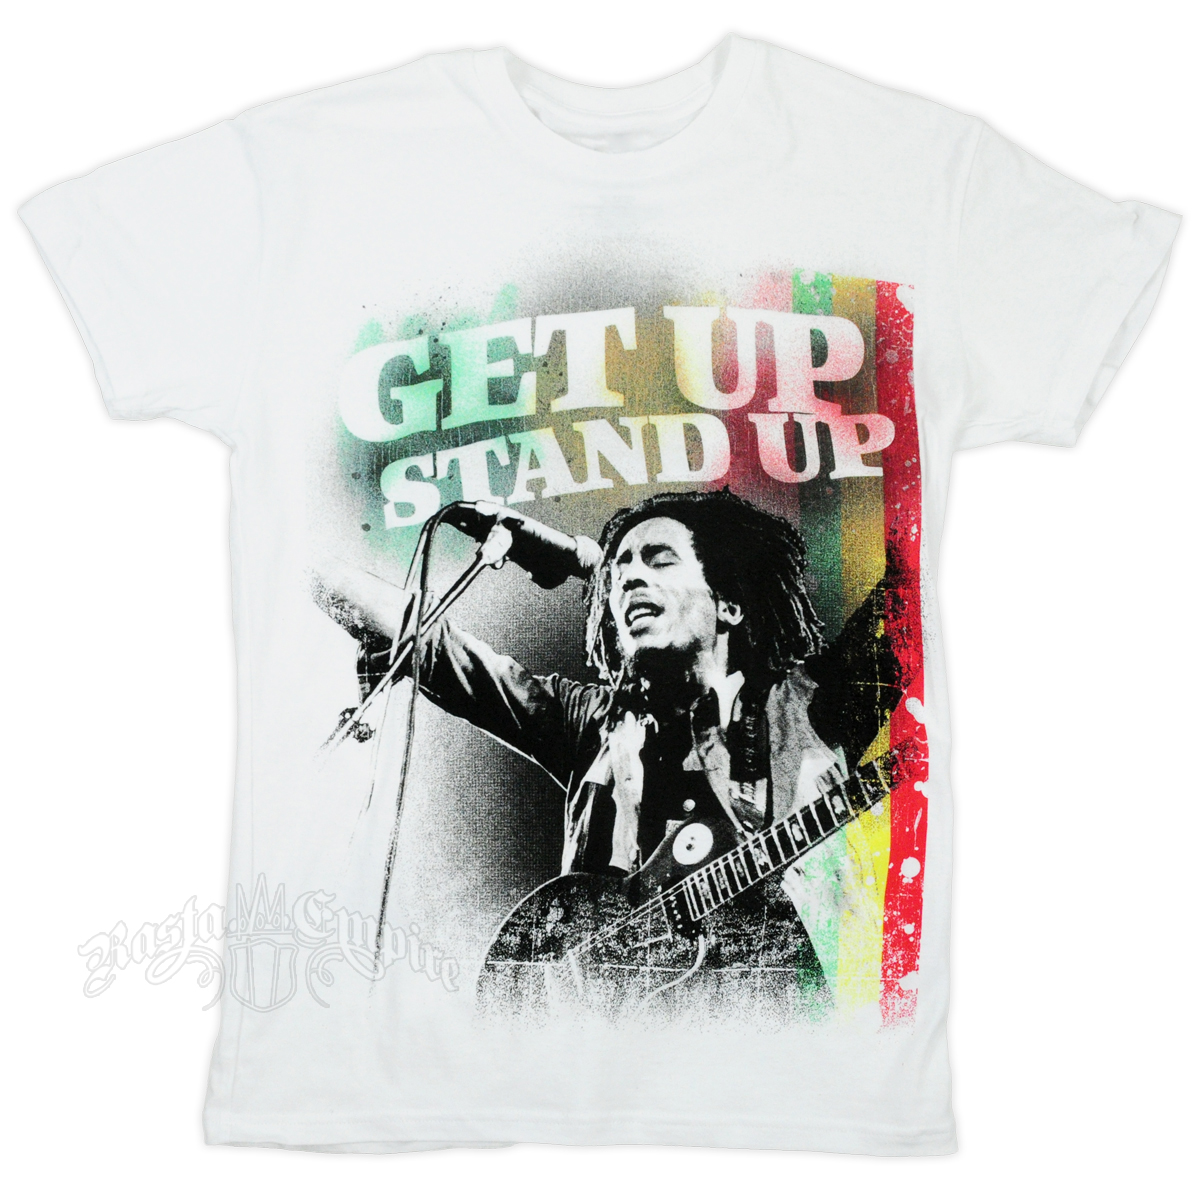 Bob Marley Rasta Get Up Stand Up White T-Shirt - Men's